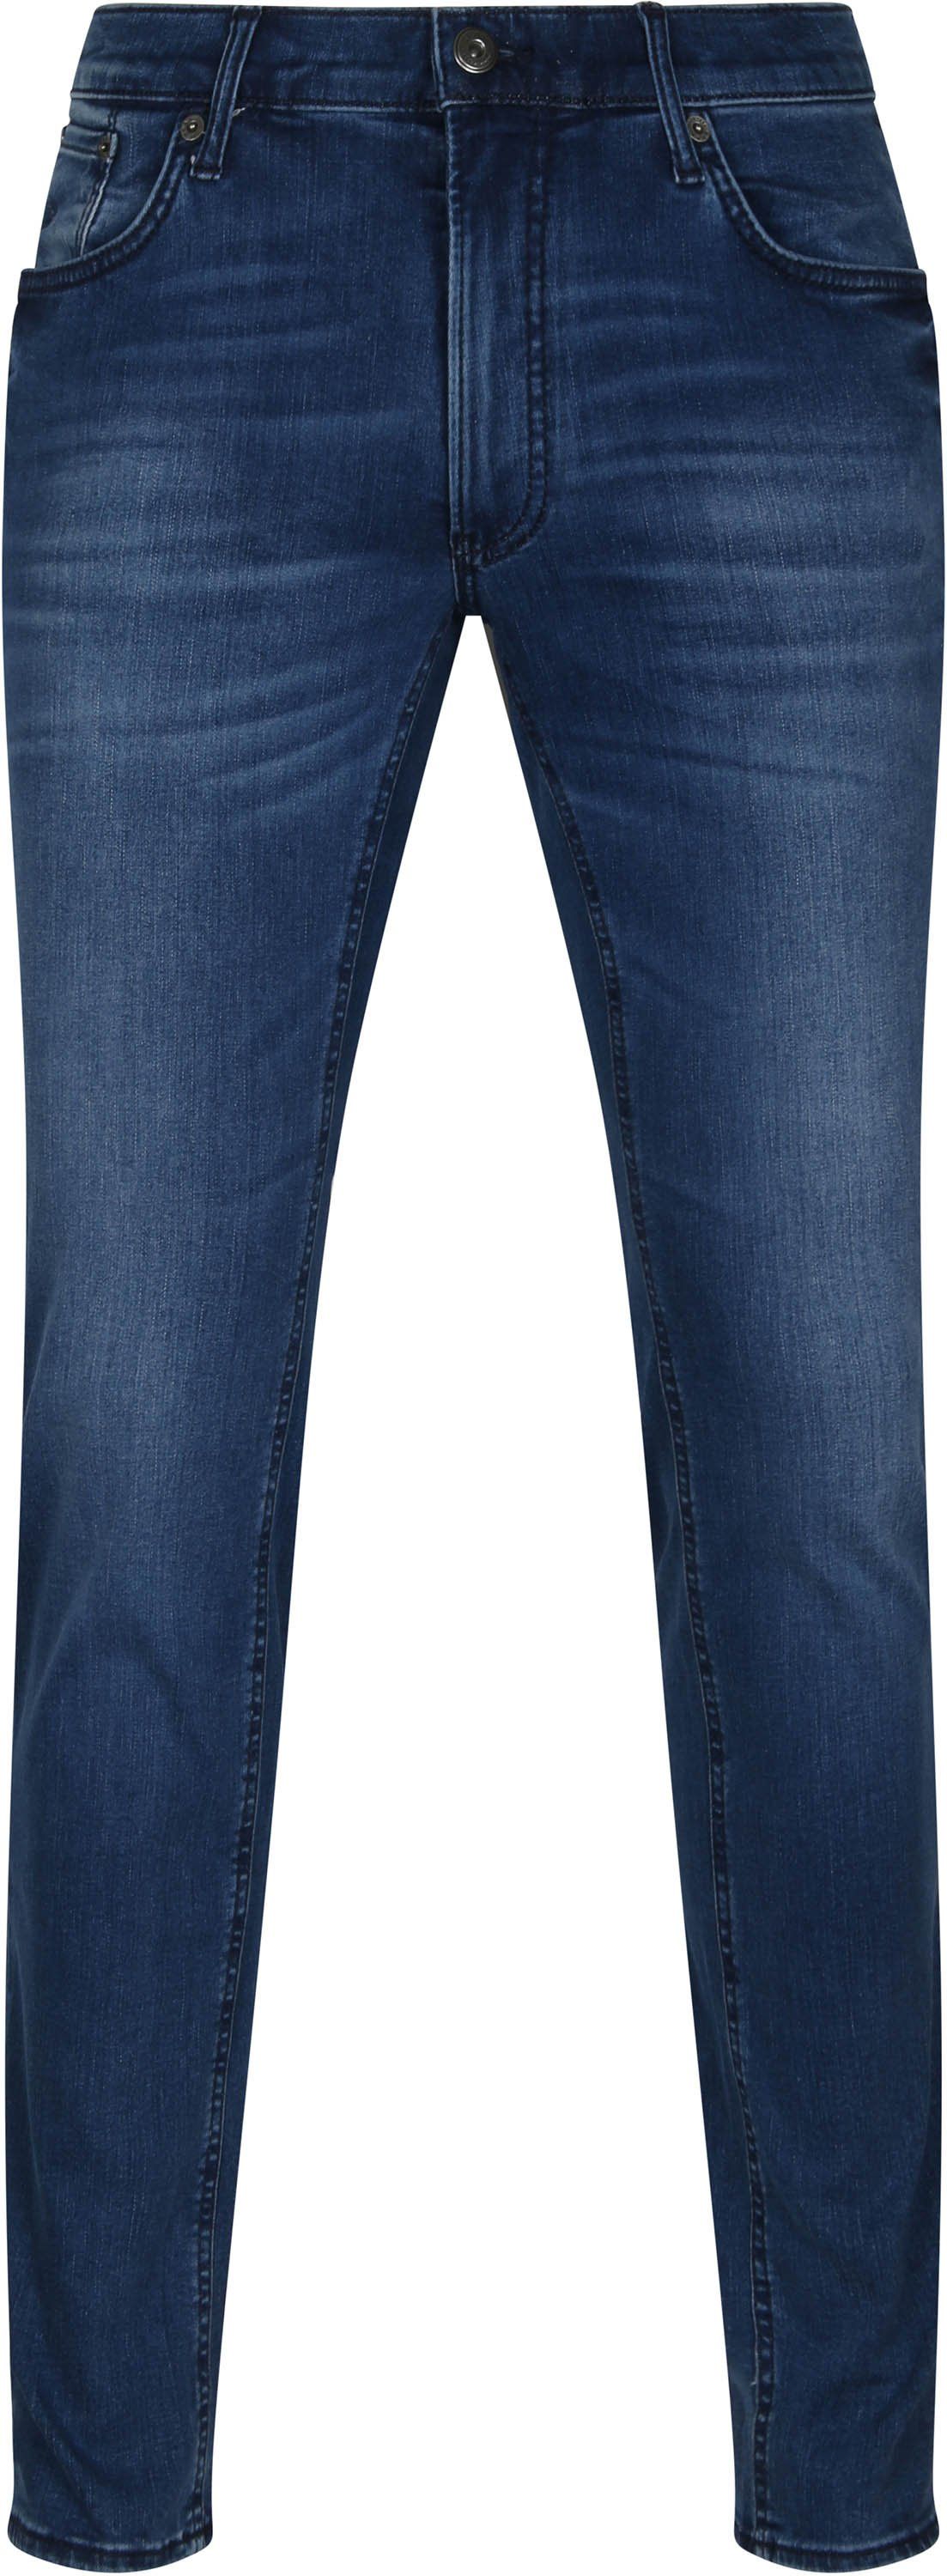 Brax Chuck Denim Jeans Used Blue Dark Blue size W 33